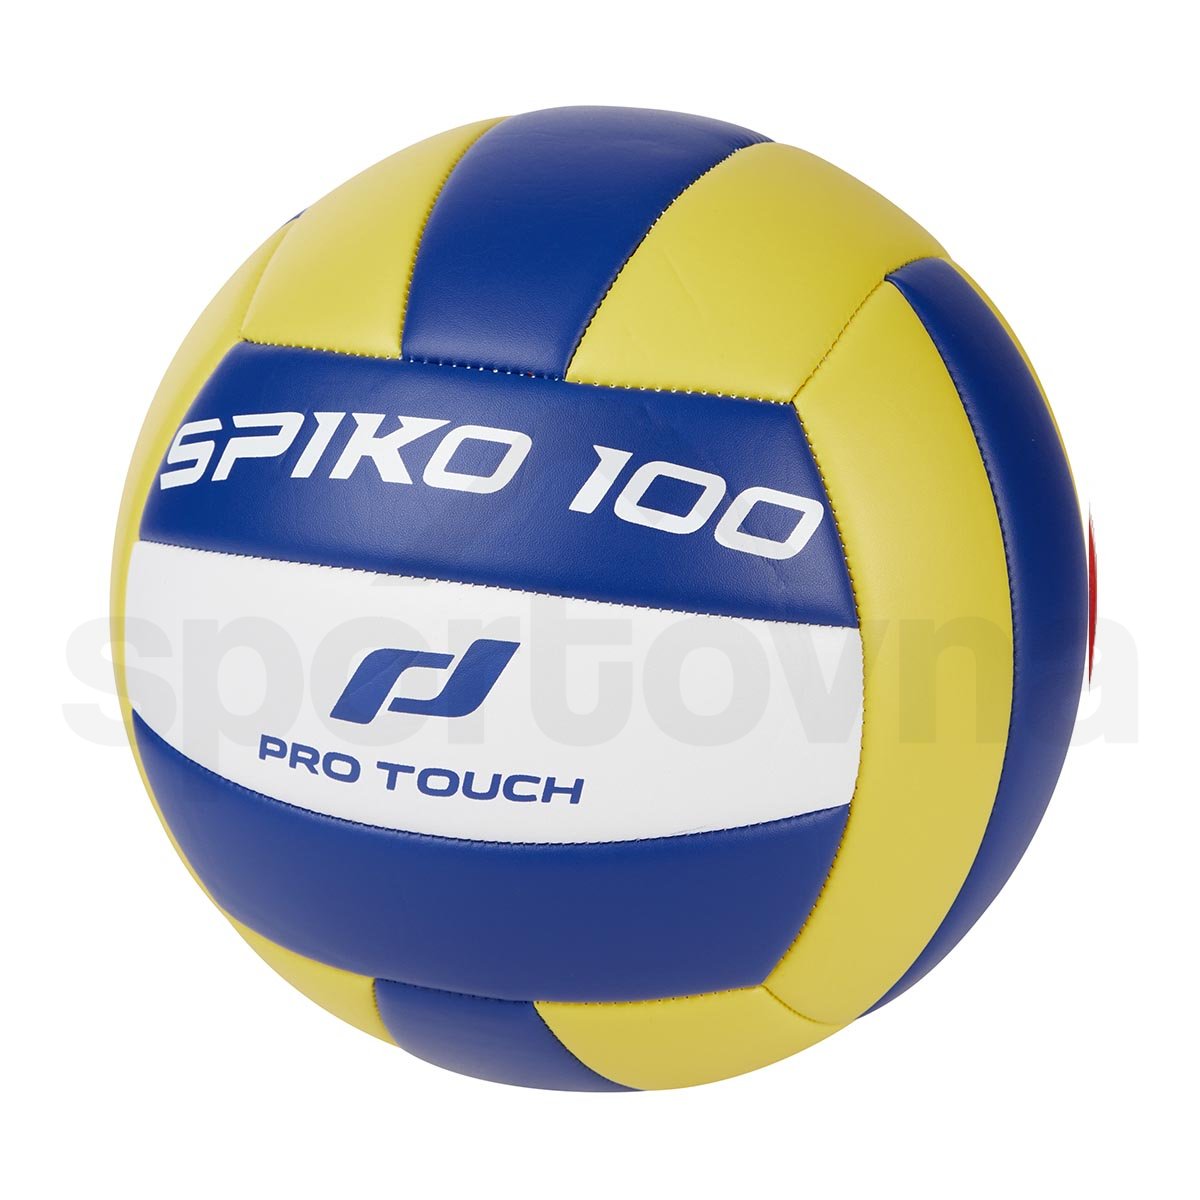 Míč Pro Touch Spiko 100 Indoor - žlutá/modrá